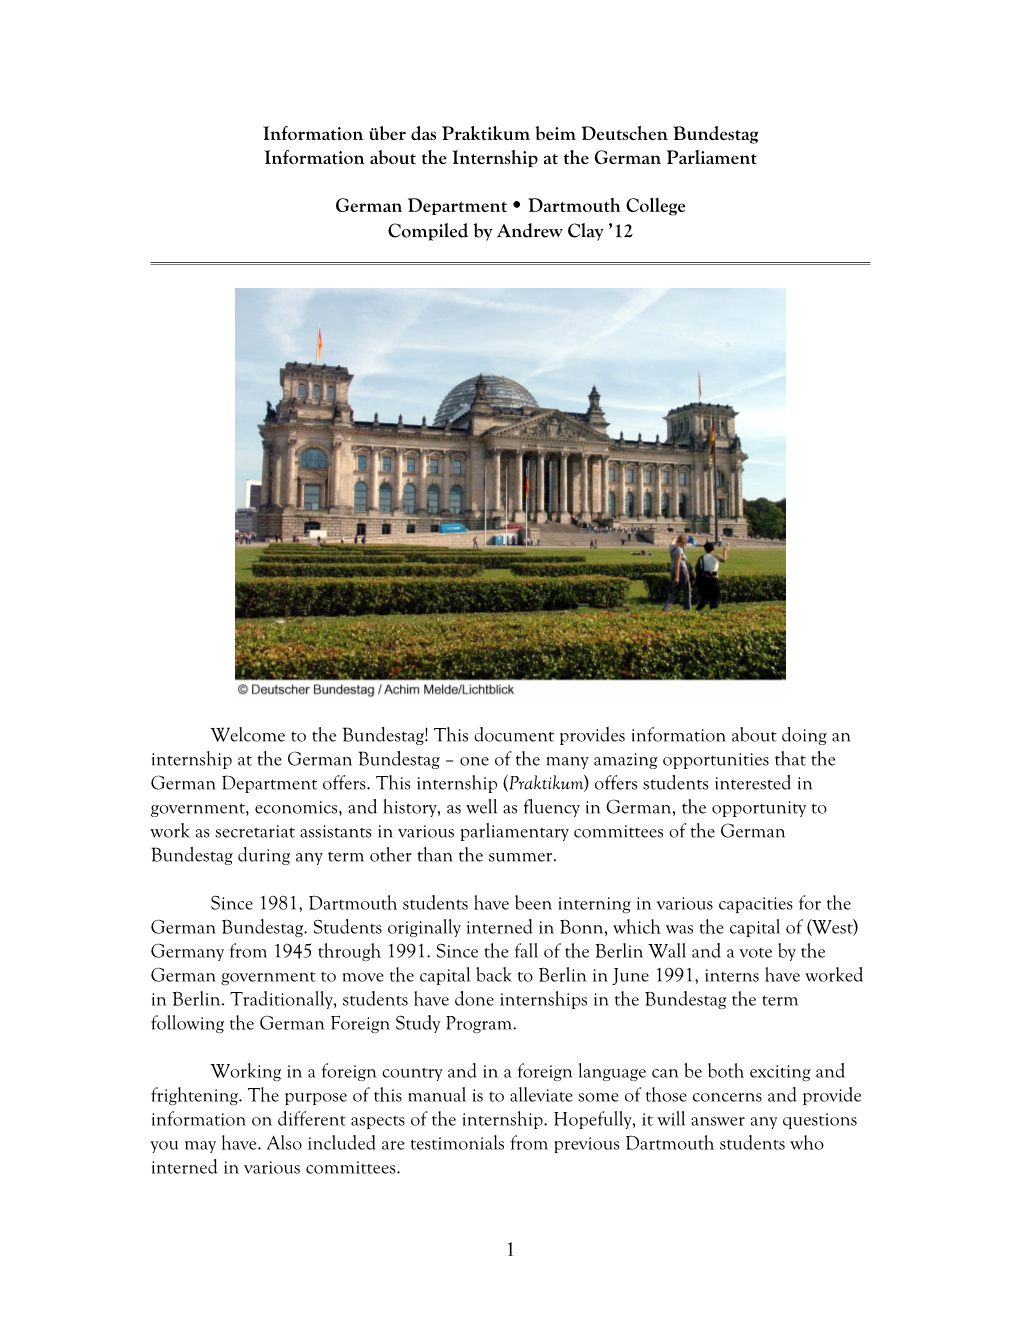 Bundestag Internship Manual